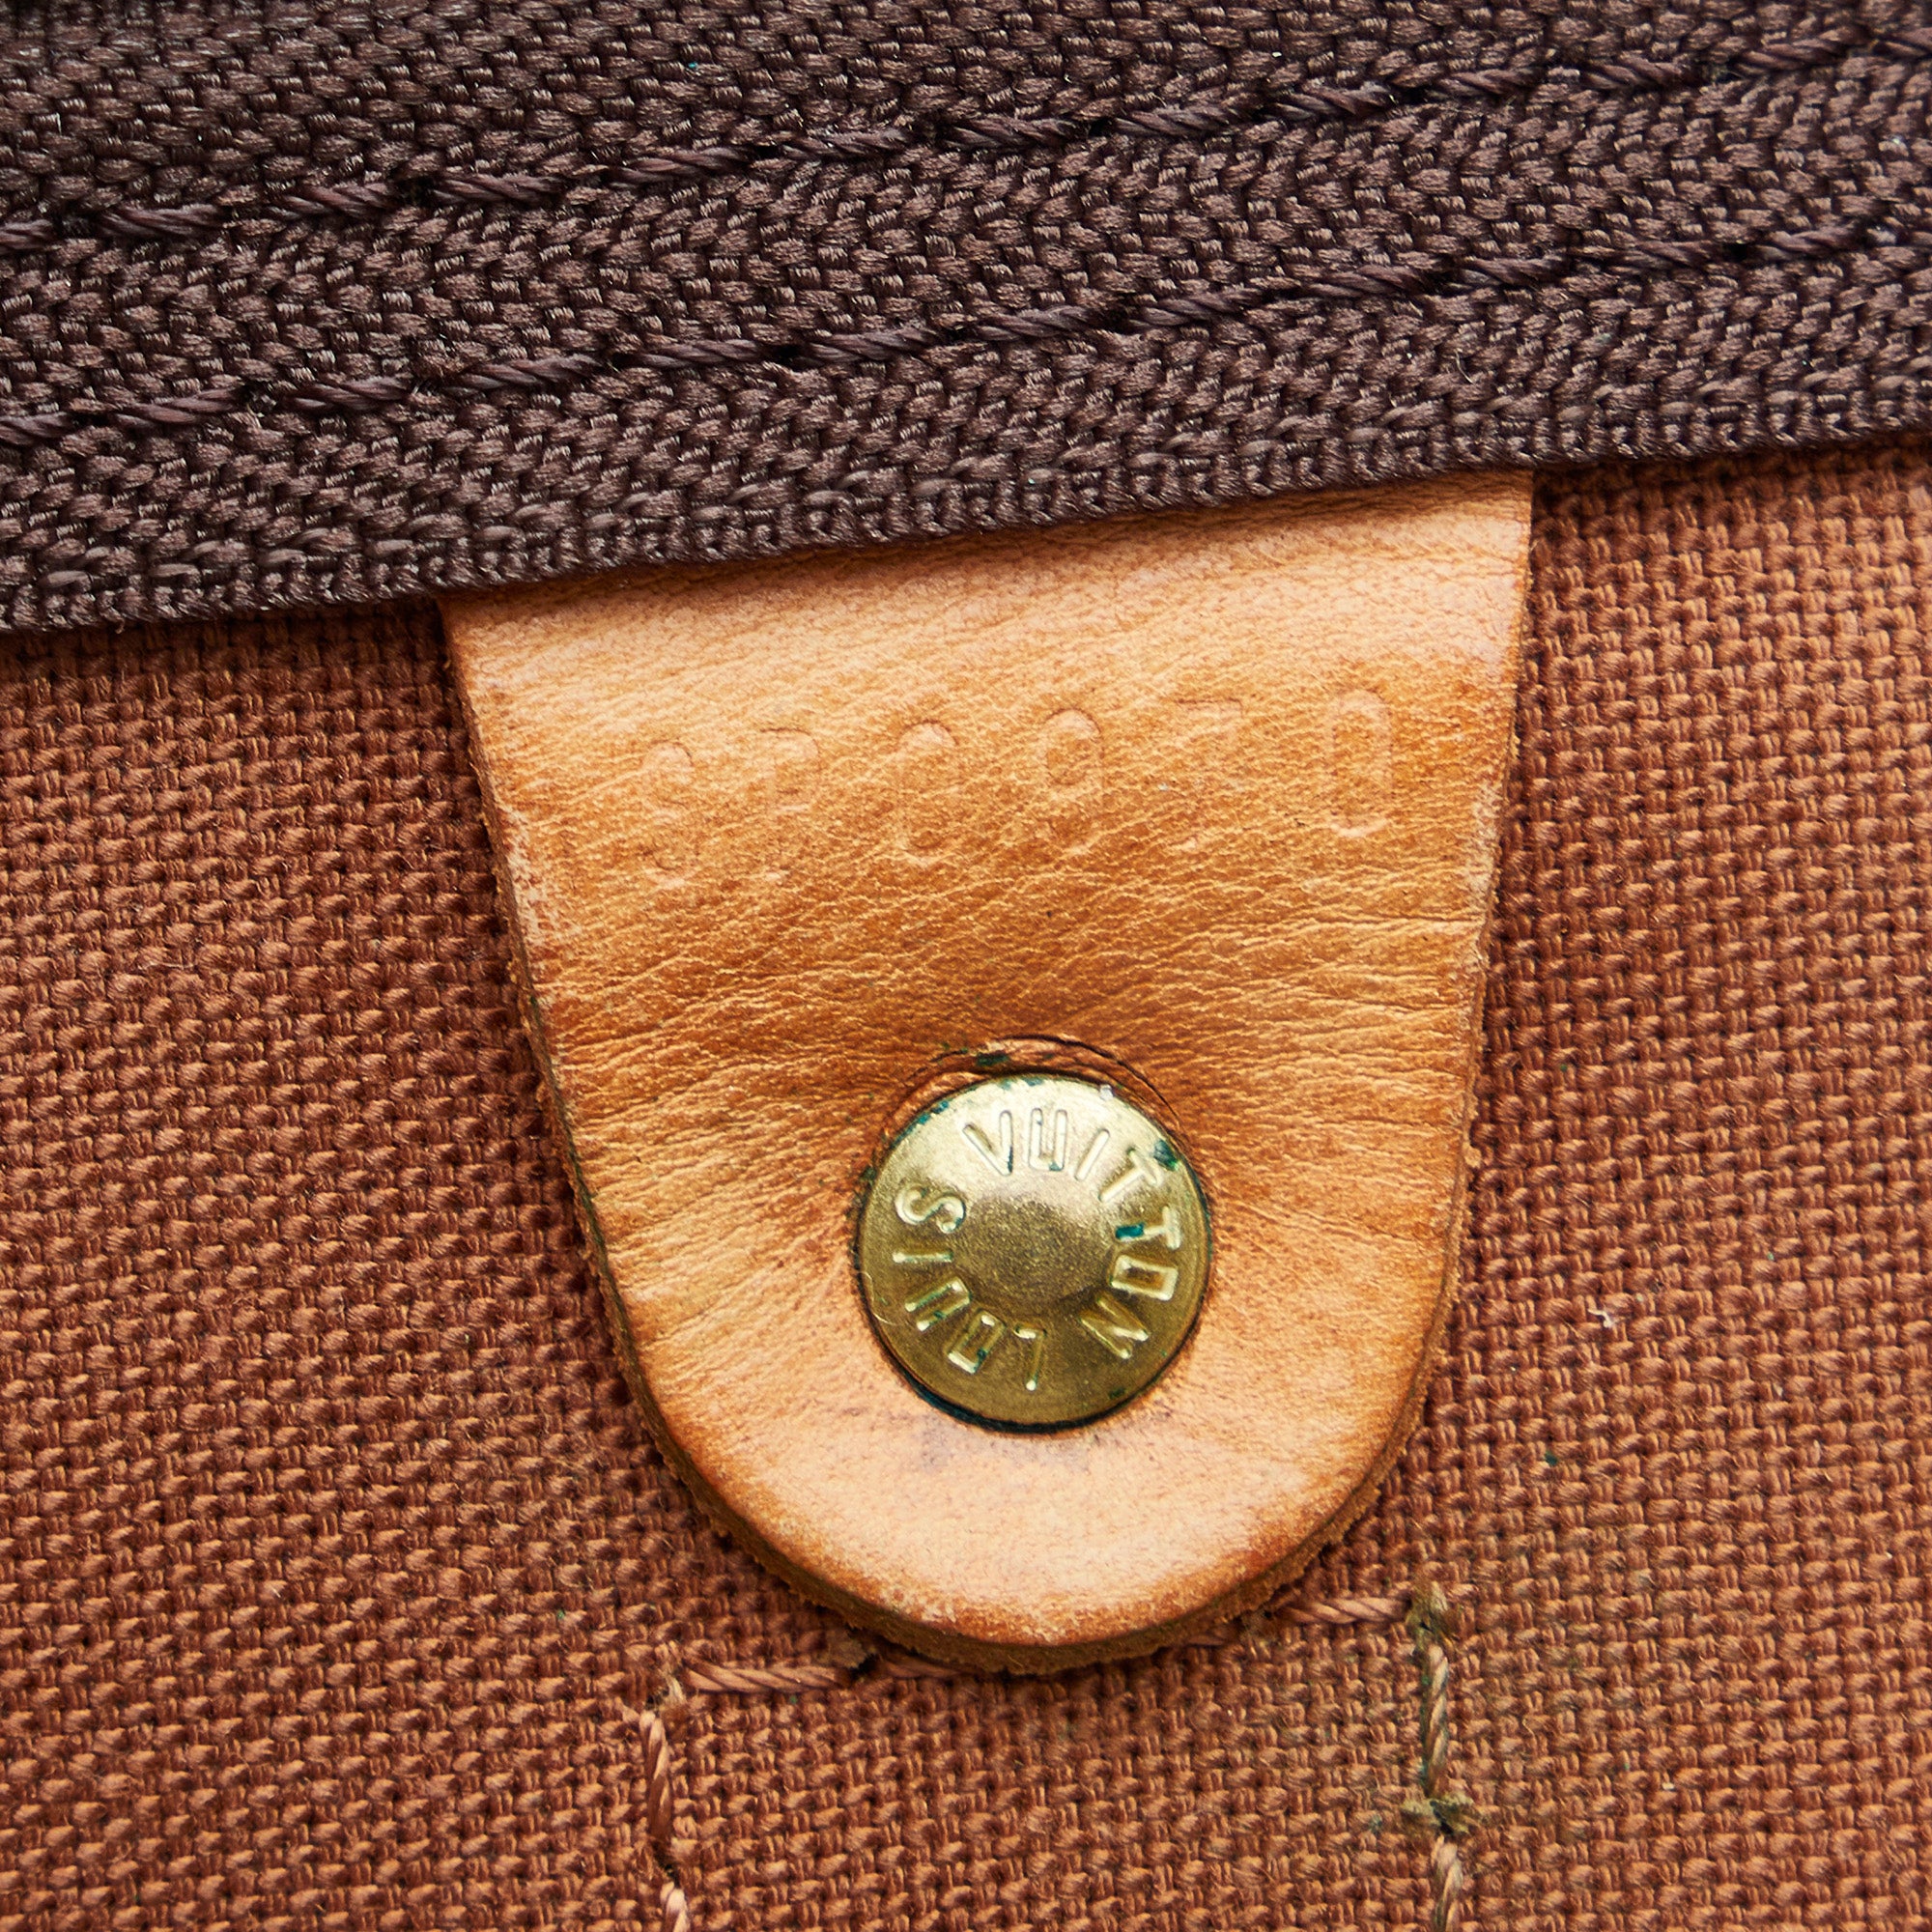 Louis Vuitton Damier Ebene Nolita 24 Heures Travel Bag